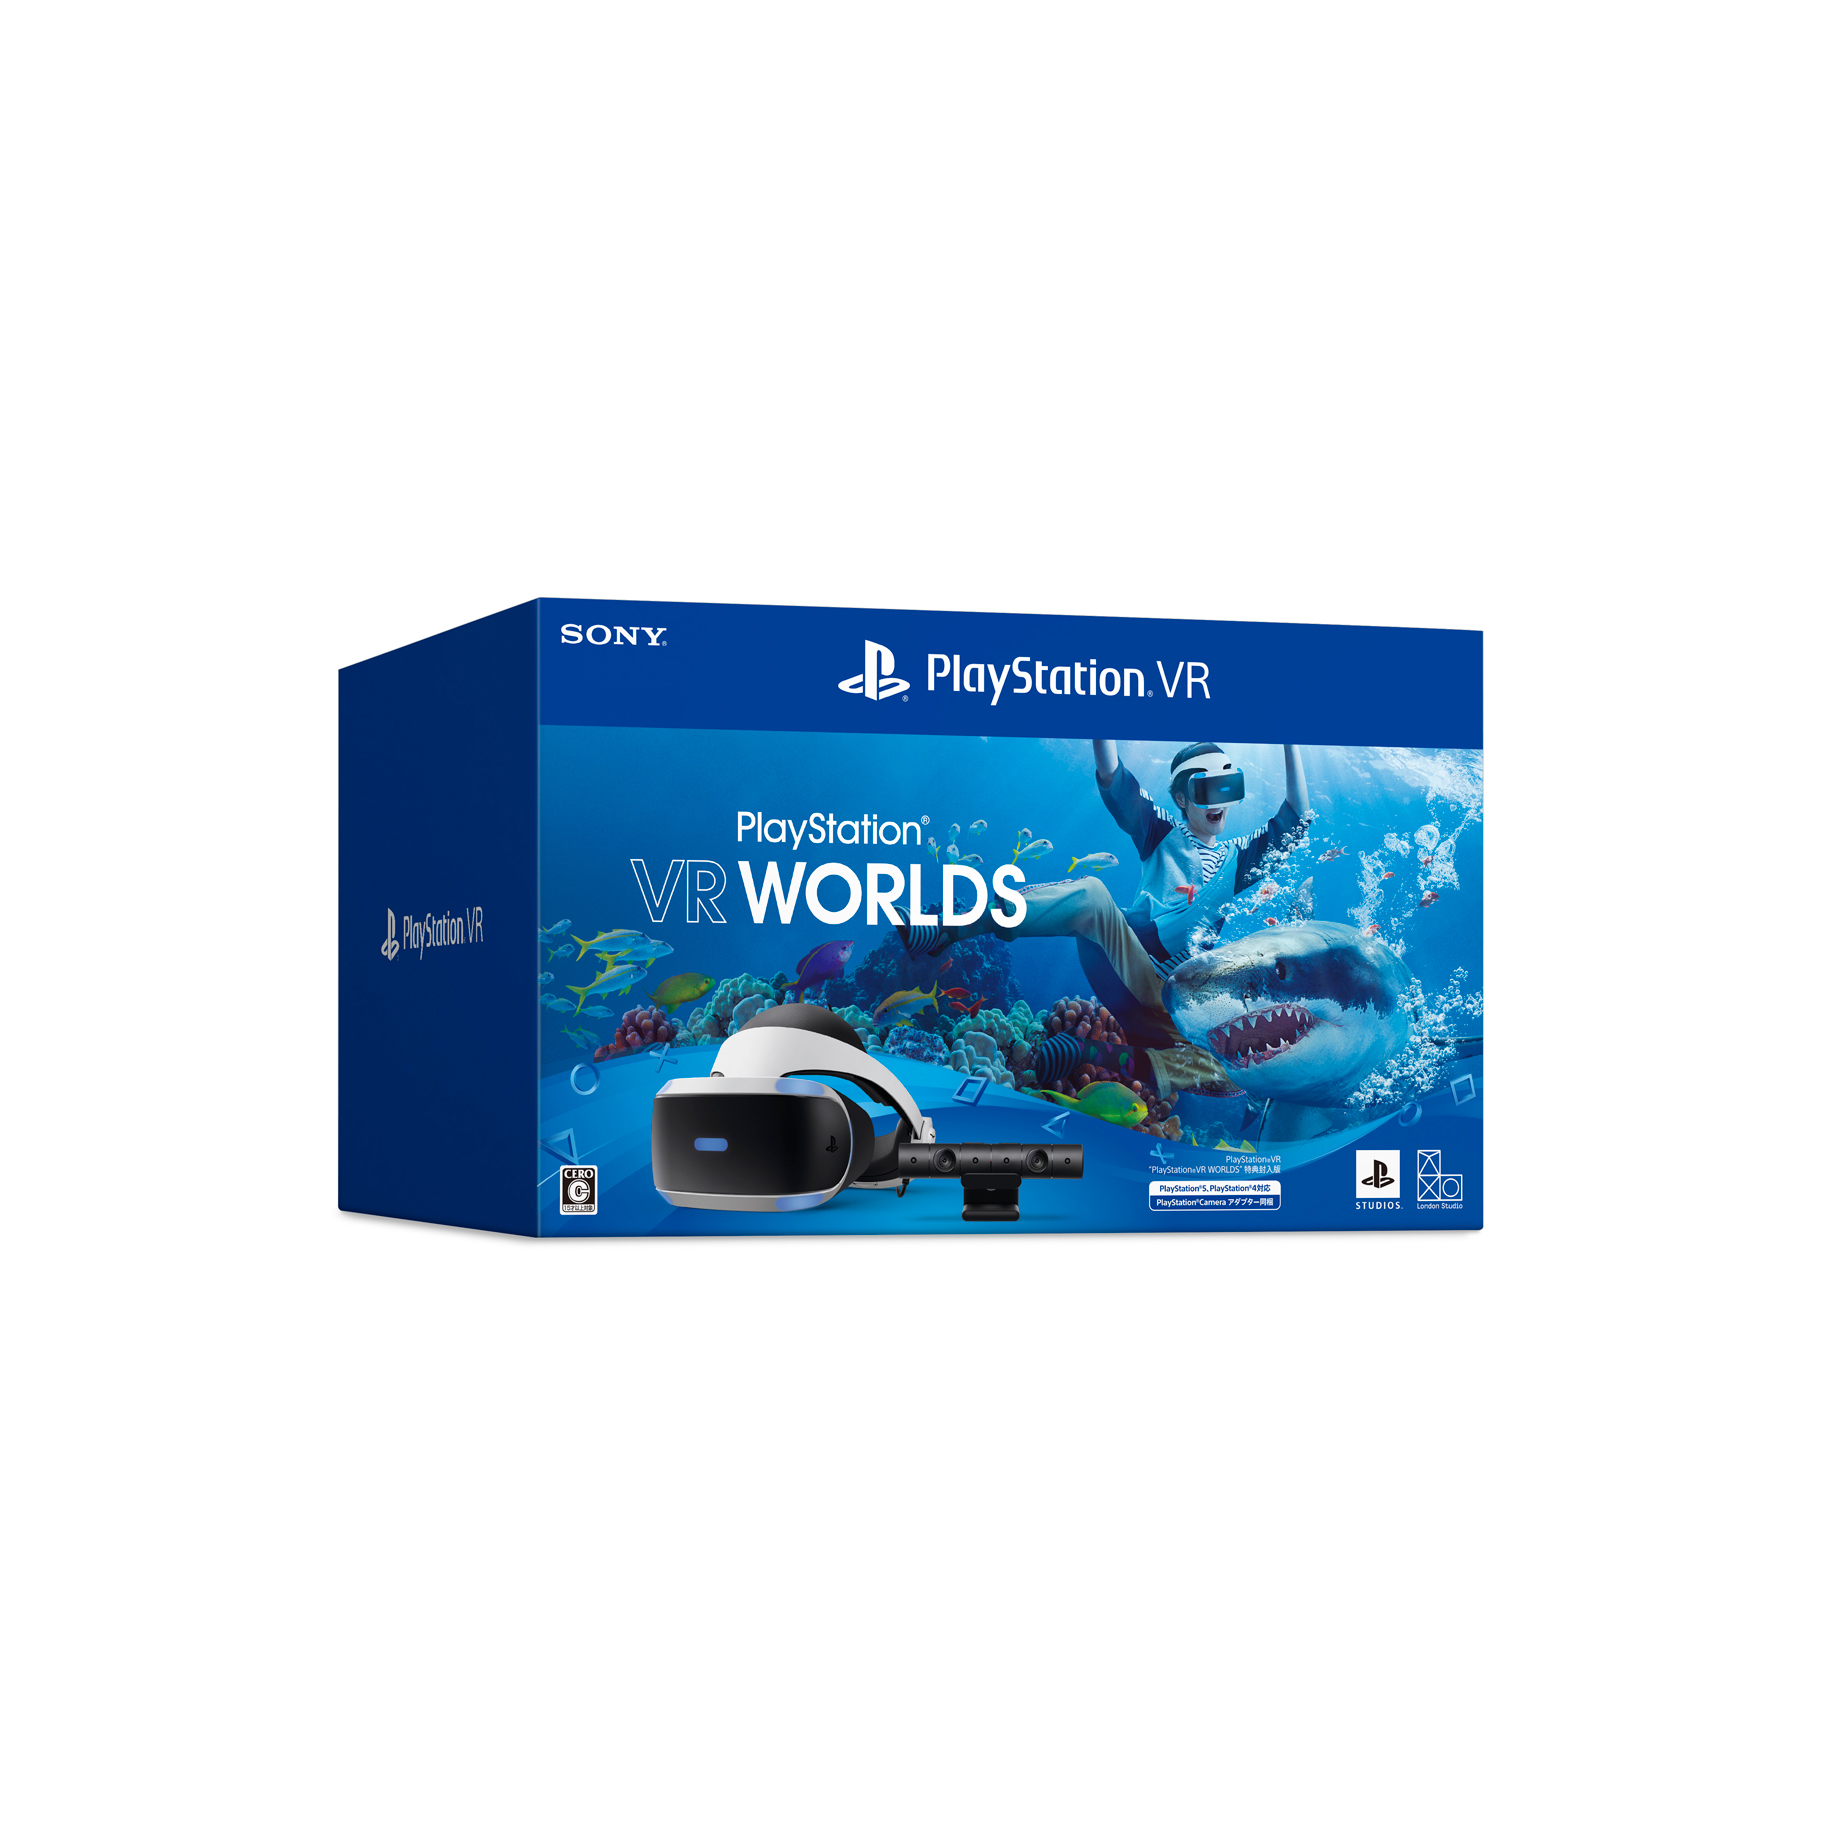 PlayStation VR “PlayStation VR WORLDS” 特典封入版